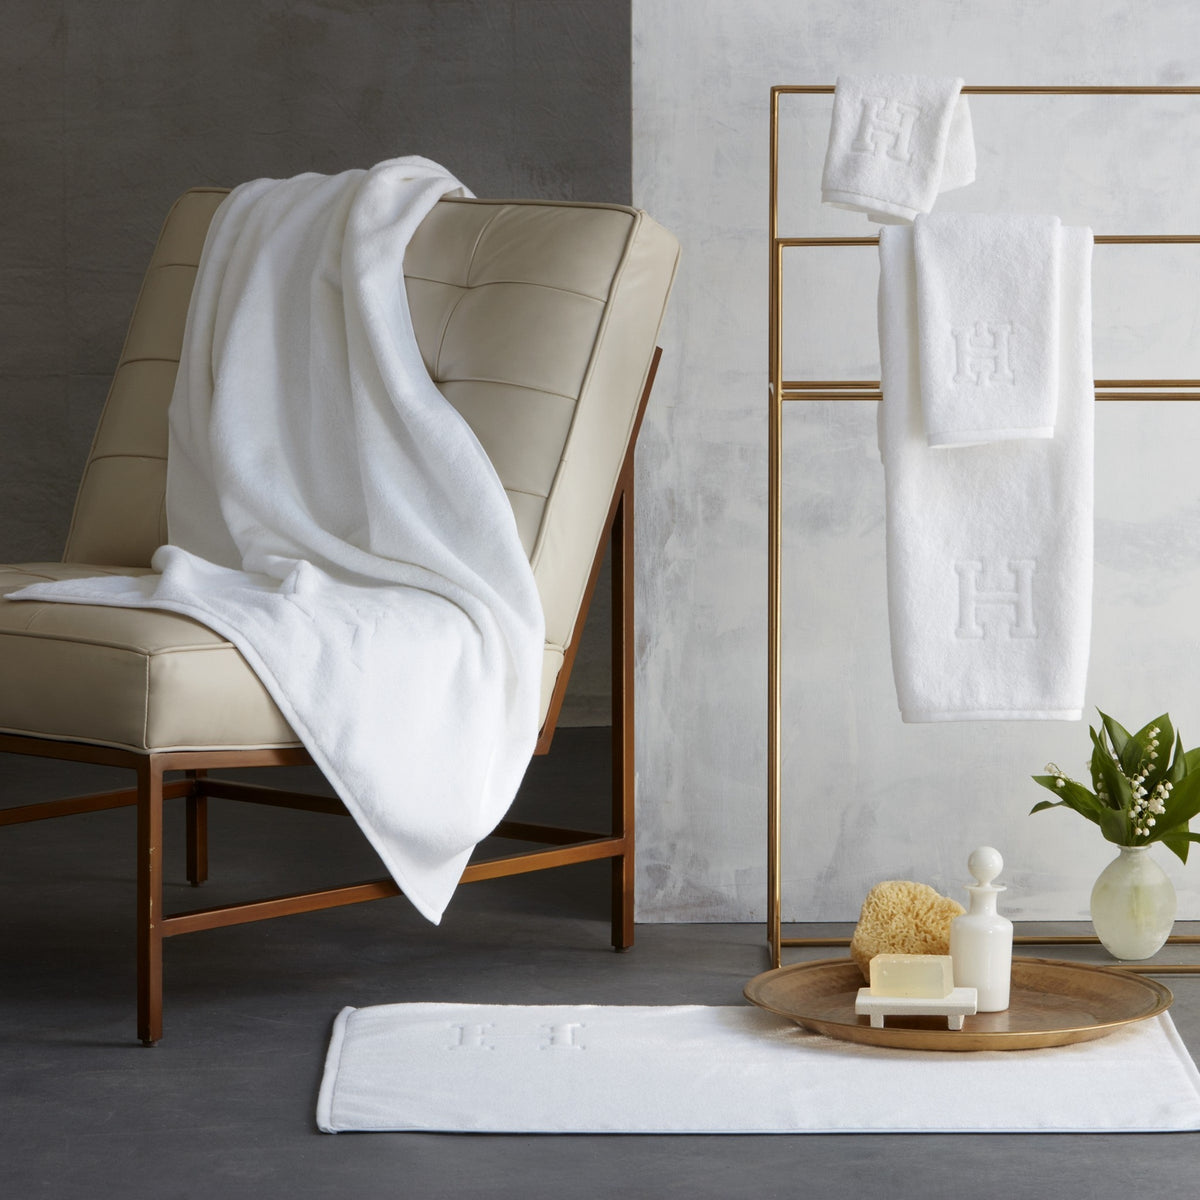 Lifestyle Image of Matouk Auberge Bath Towels Indoor